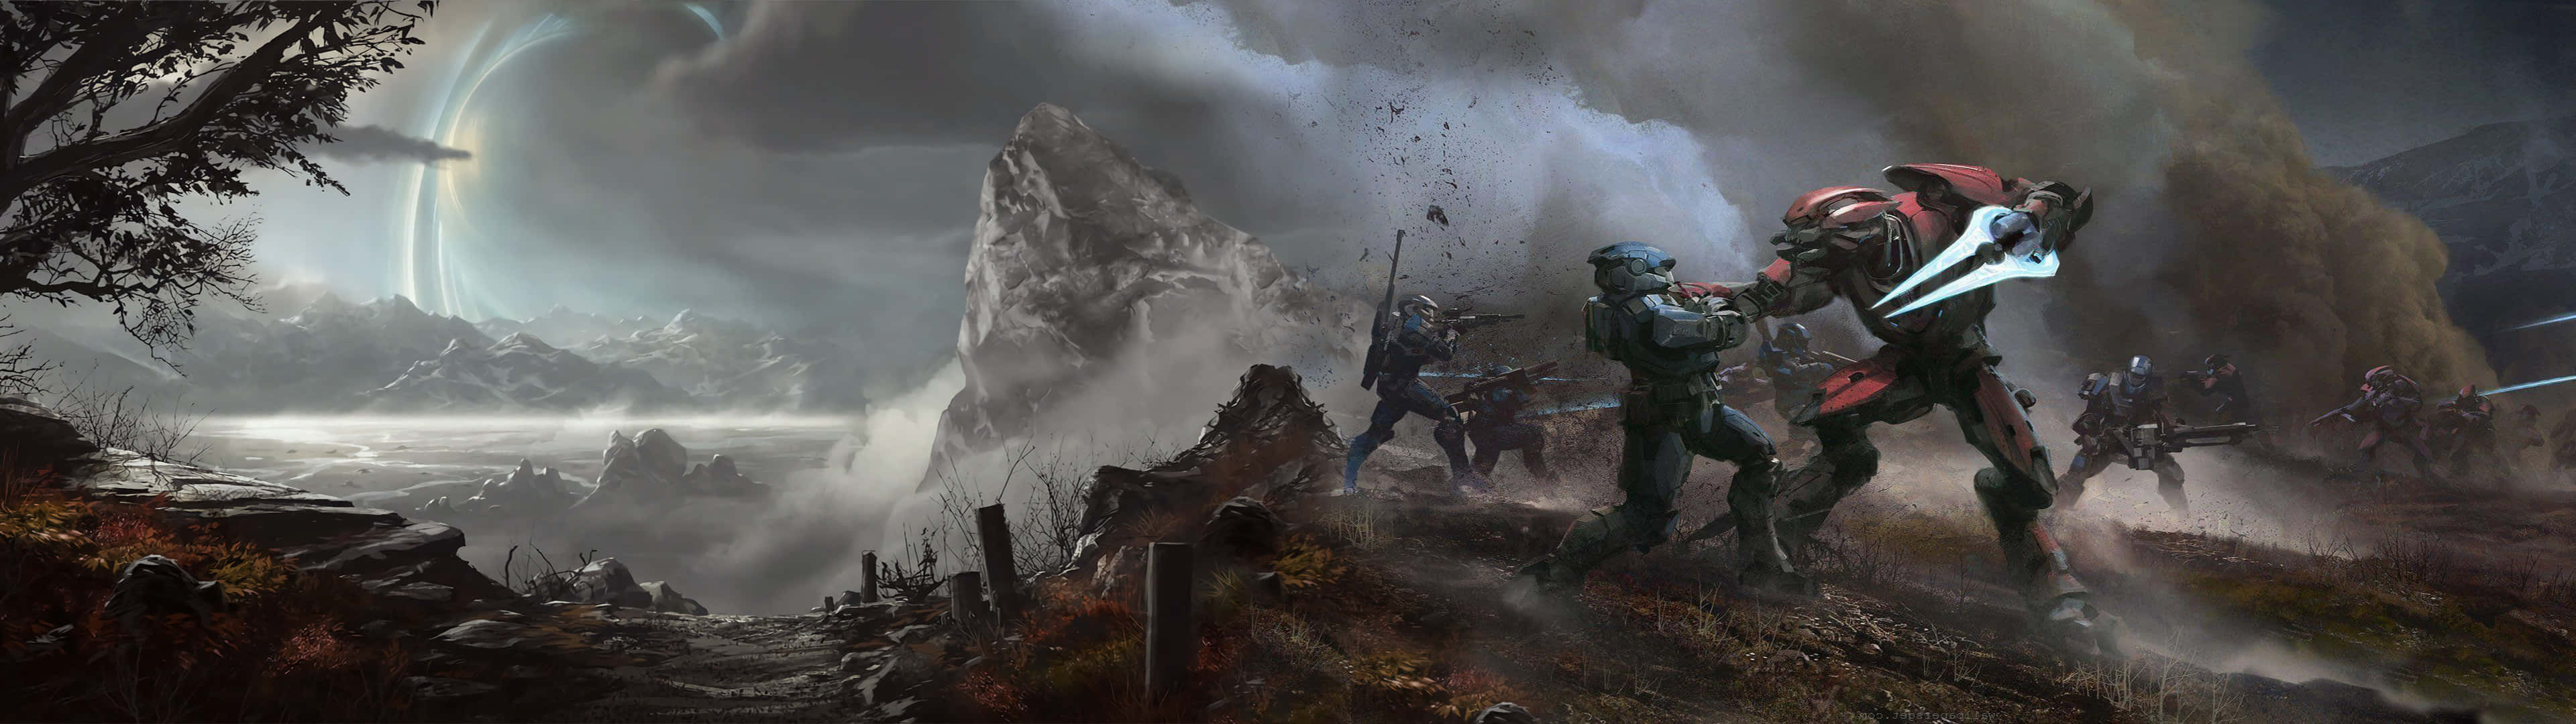 Epic Halo Battle Scene Wallpaper